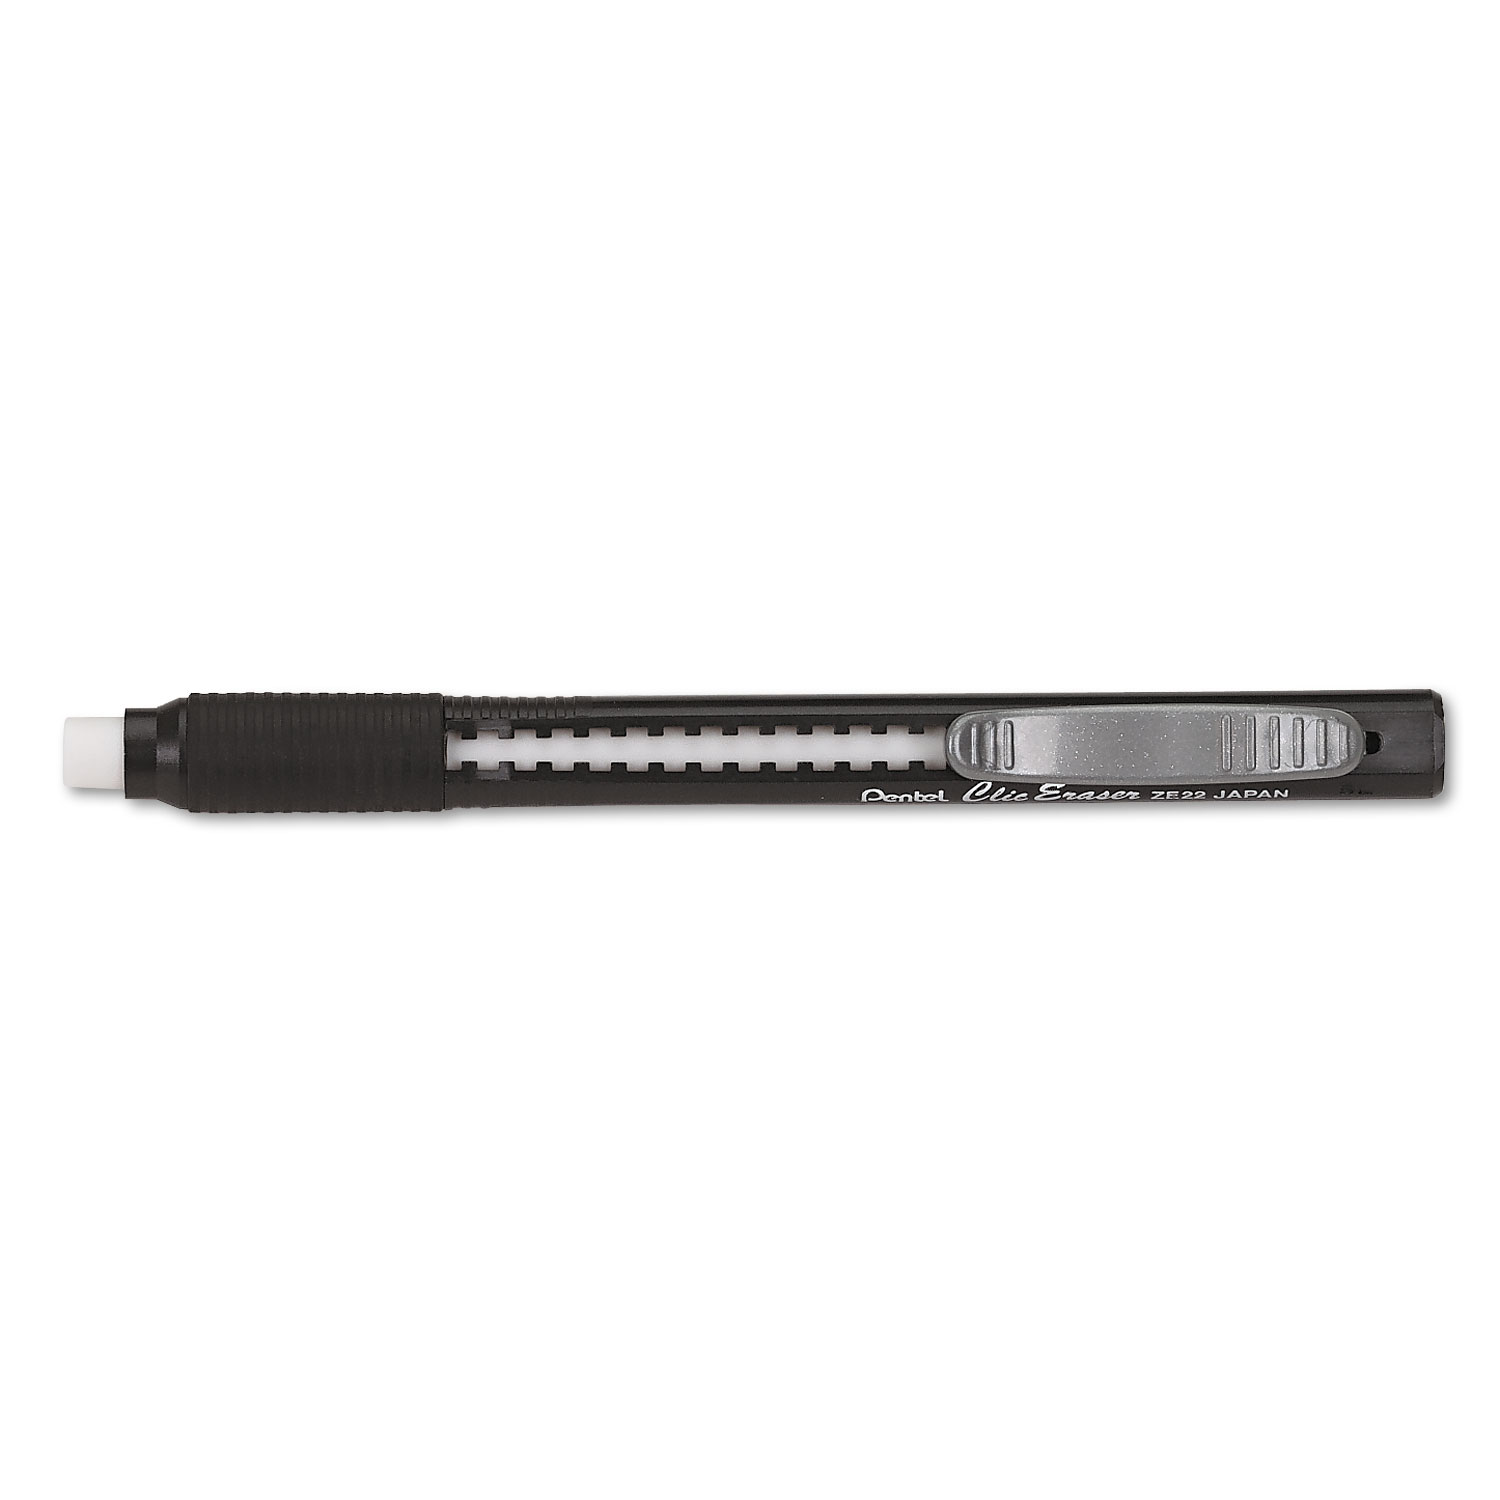 Clic Eraser Pencil-Style Grip Eraser, Black